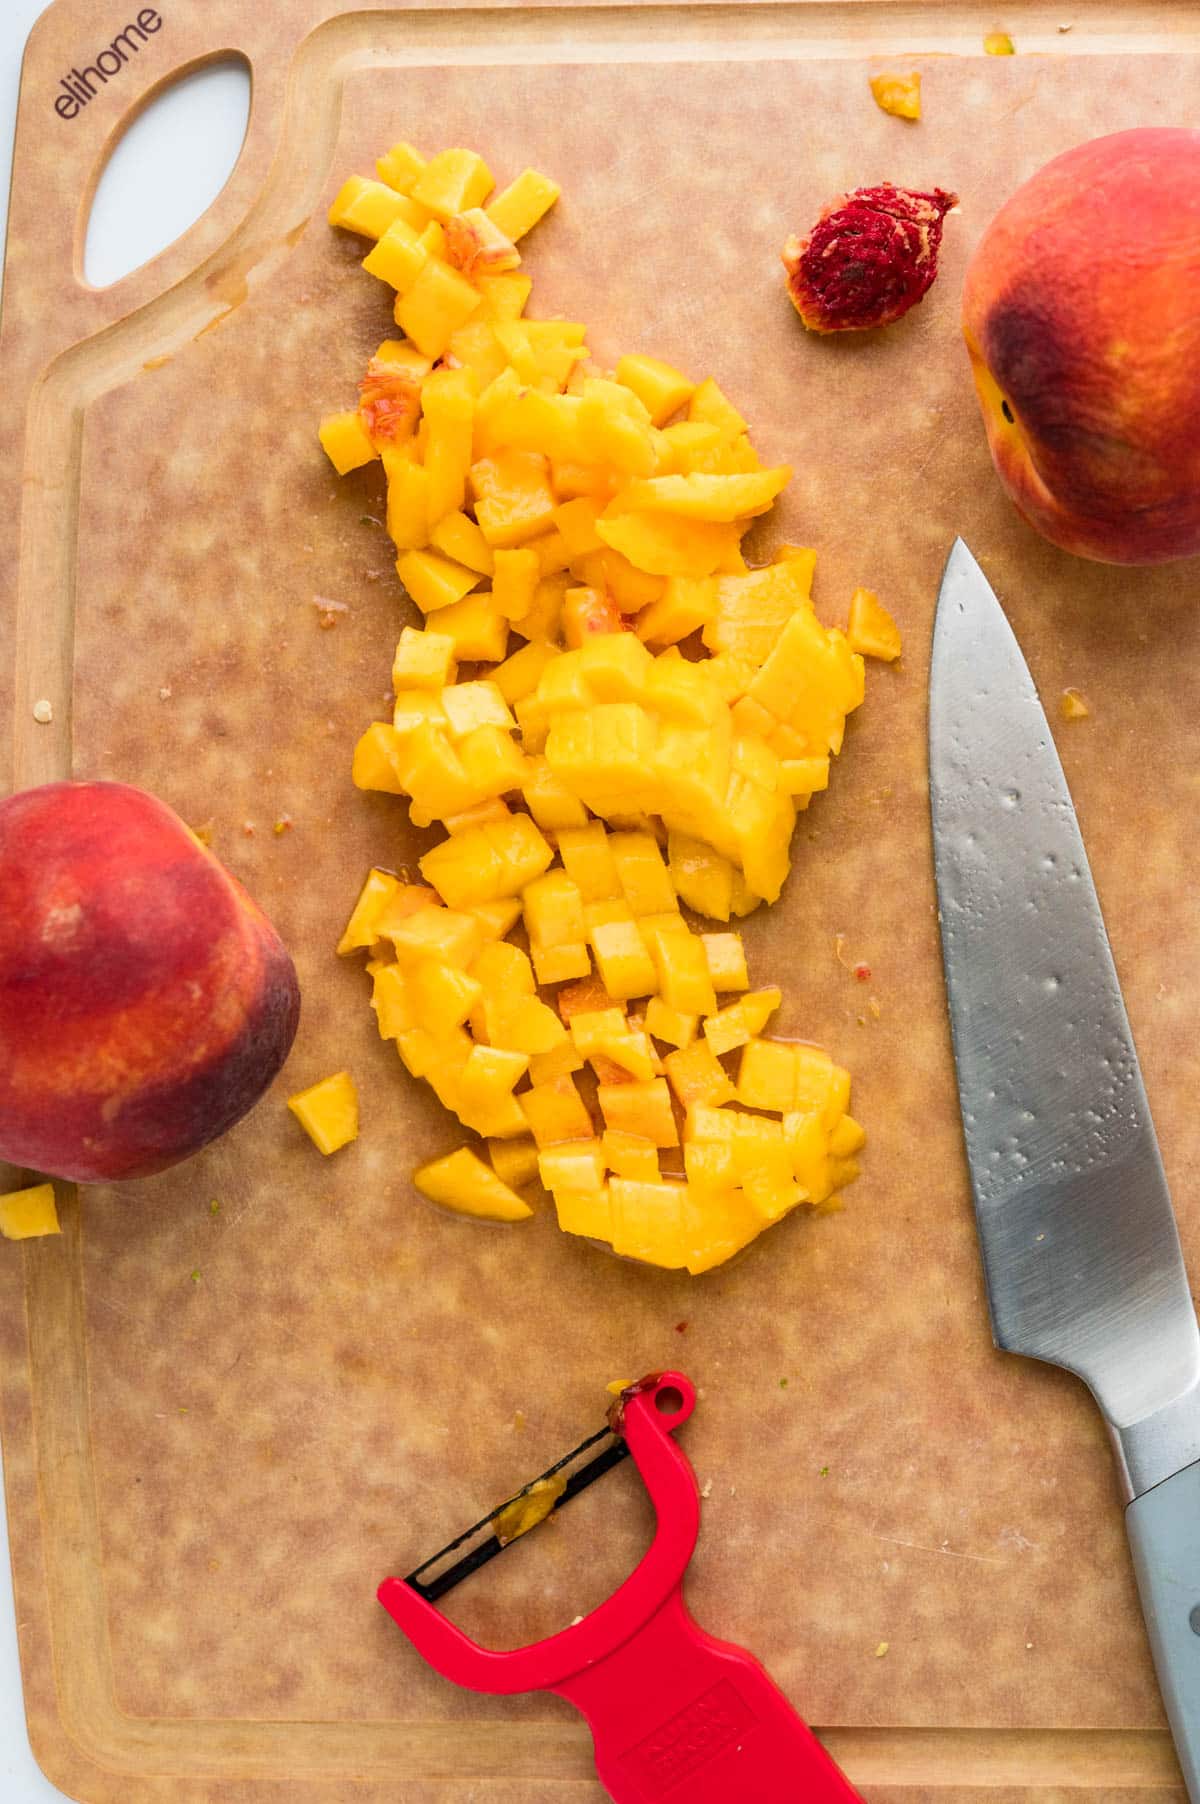 Chopping peaches on an Elihome cutting board.